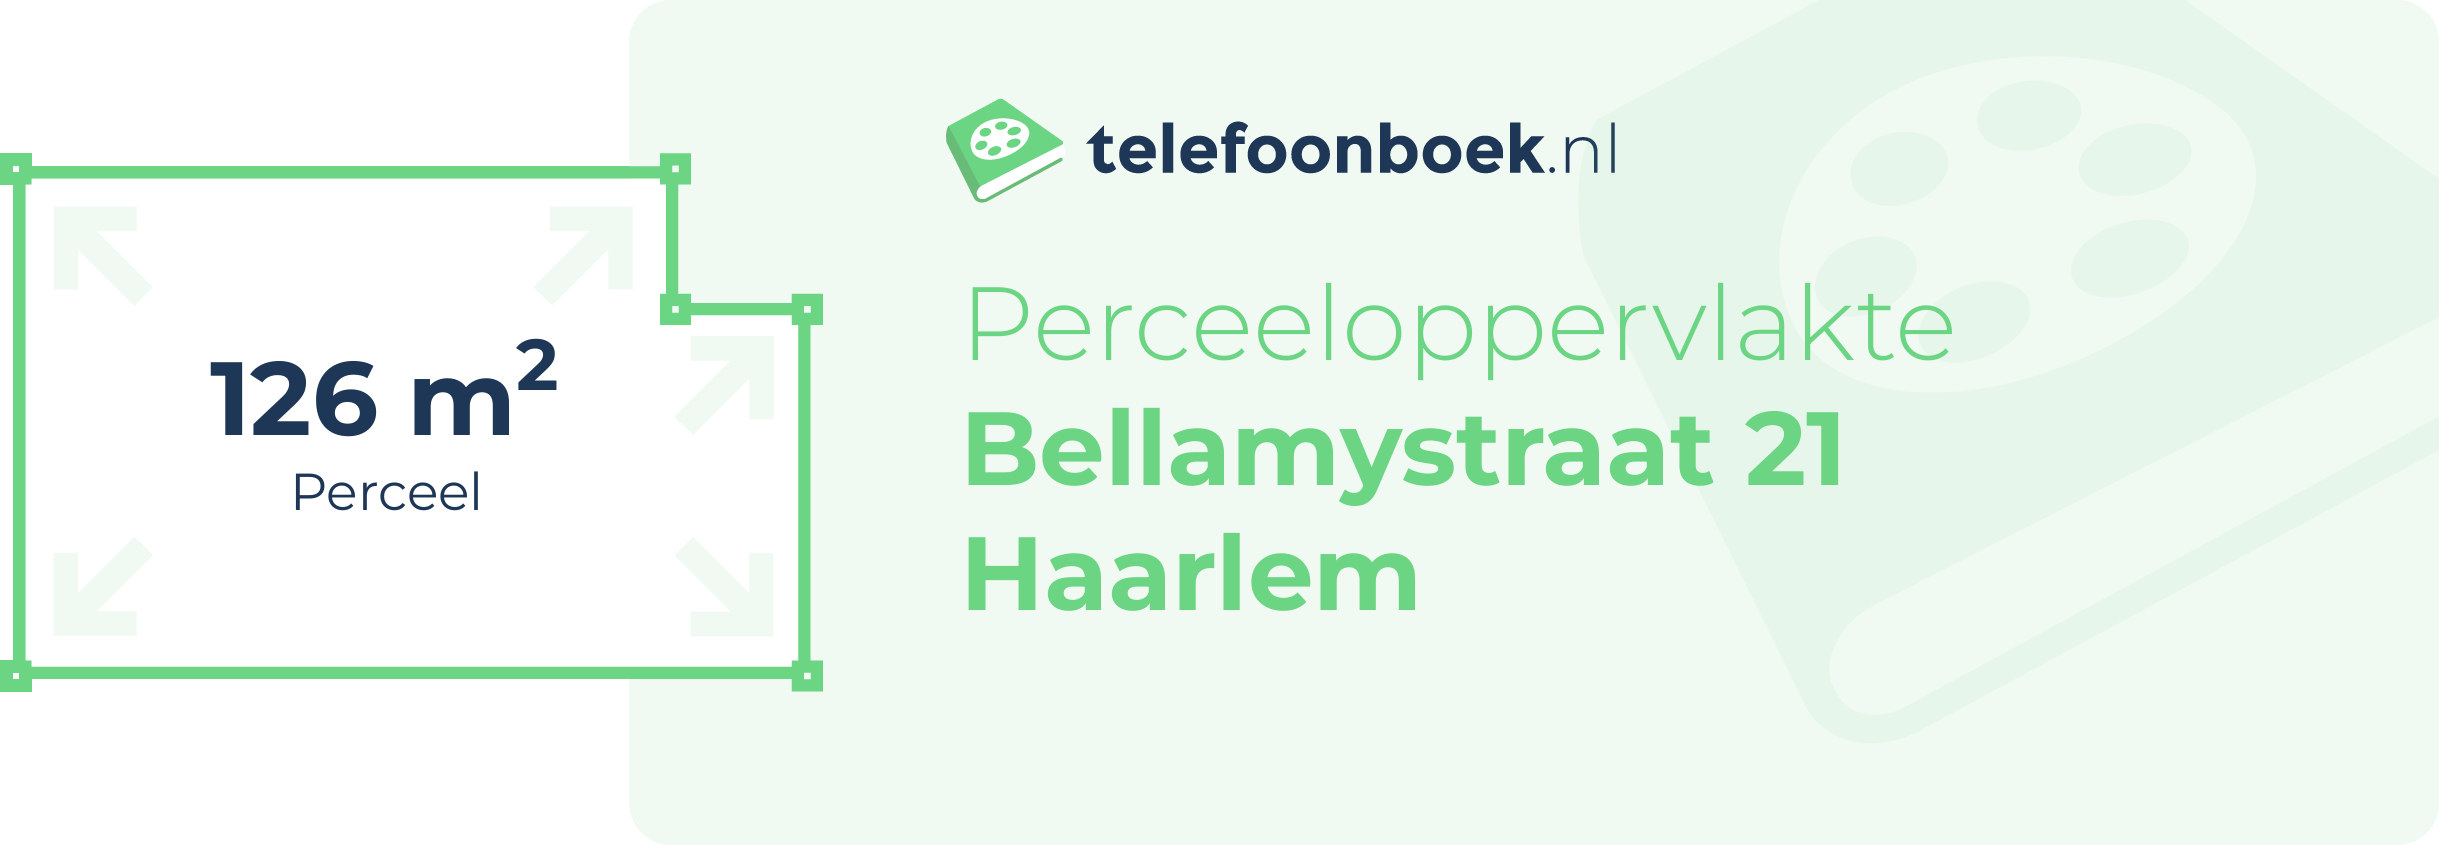 Perceeloppervlakte Bellamystraat 21 Haarlem